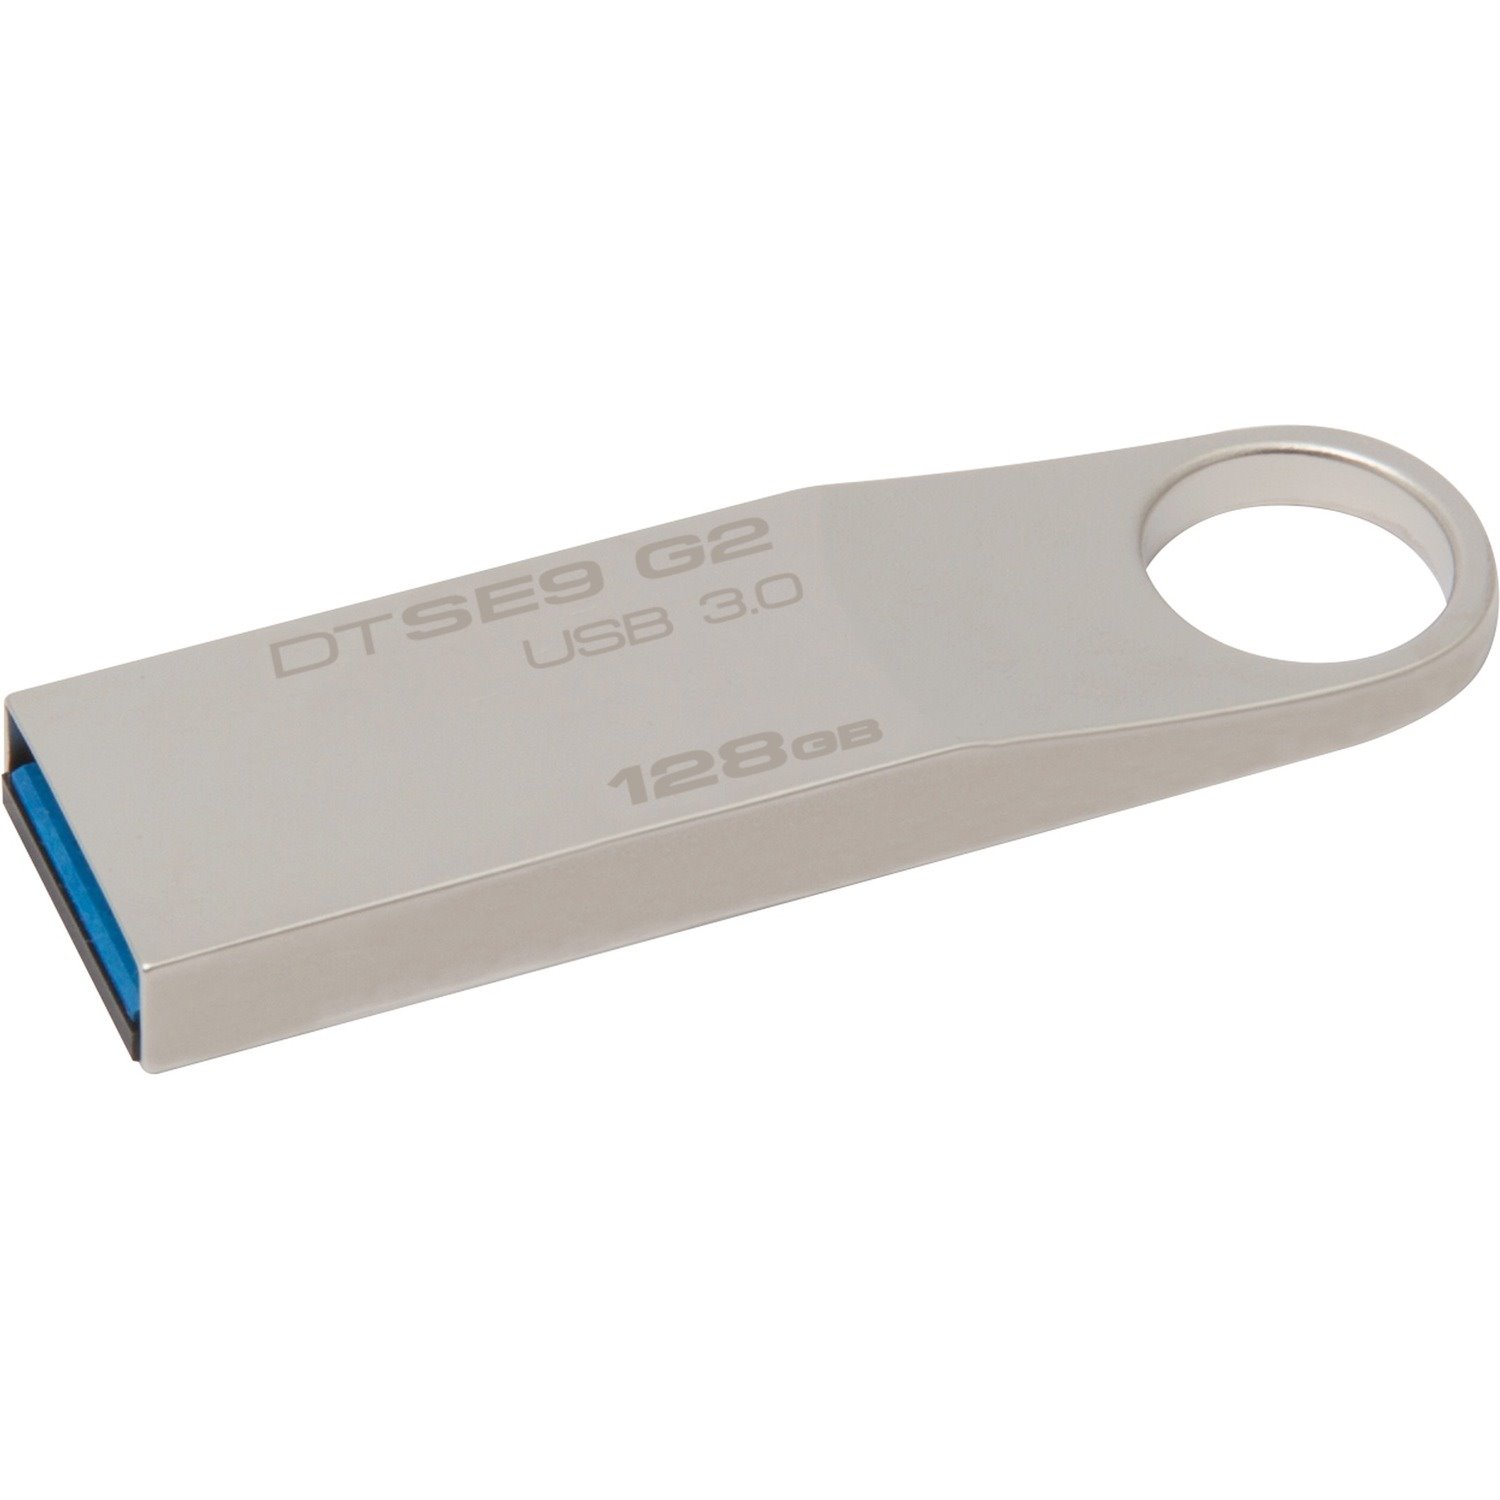 Kingston DataTraveler SE9 G2 128 GB USB 3.0 Flash Drive